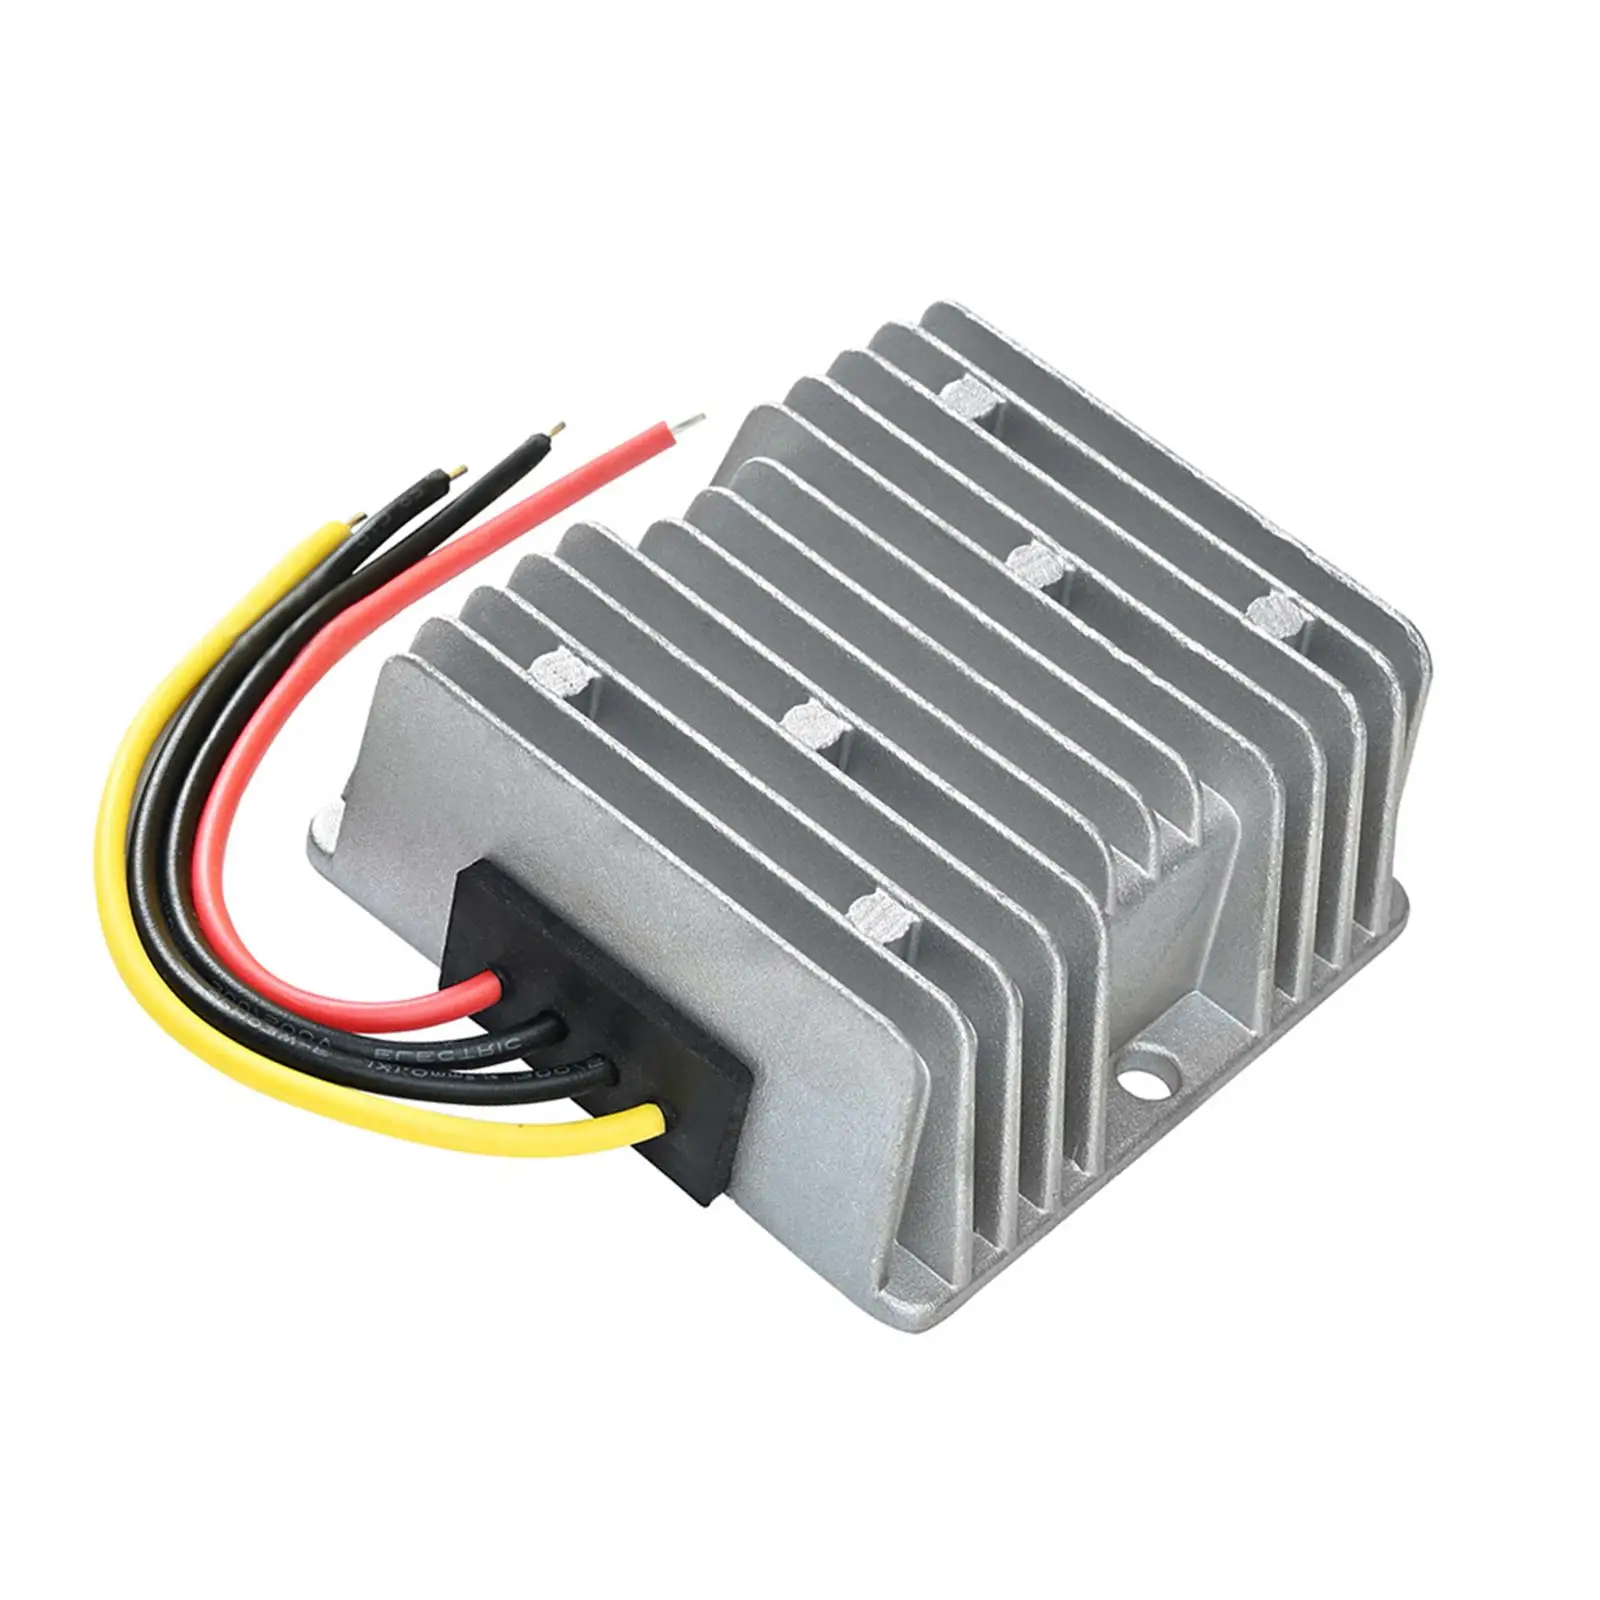 Converter IP68 Waterproof DC Voltage Converter Module for Car